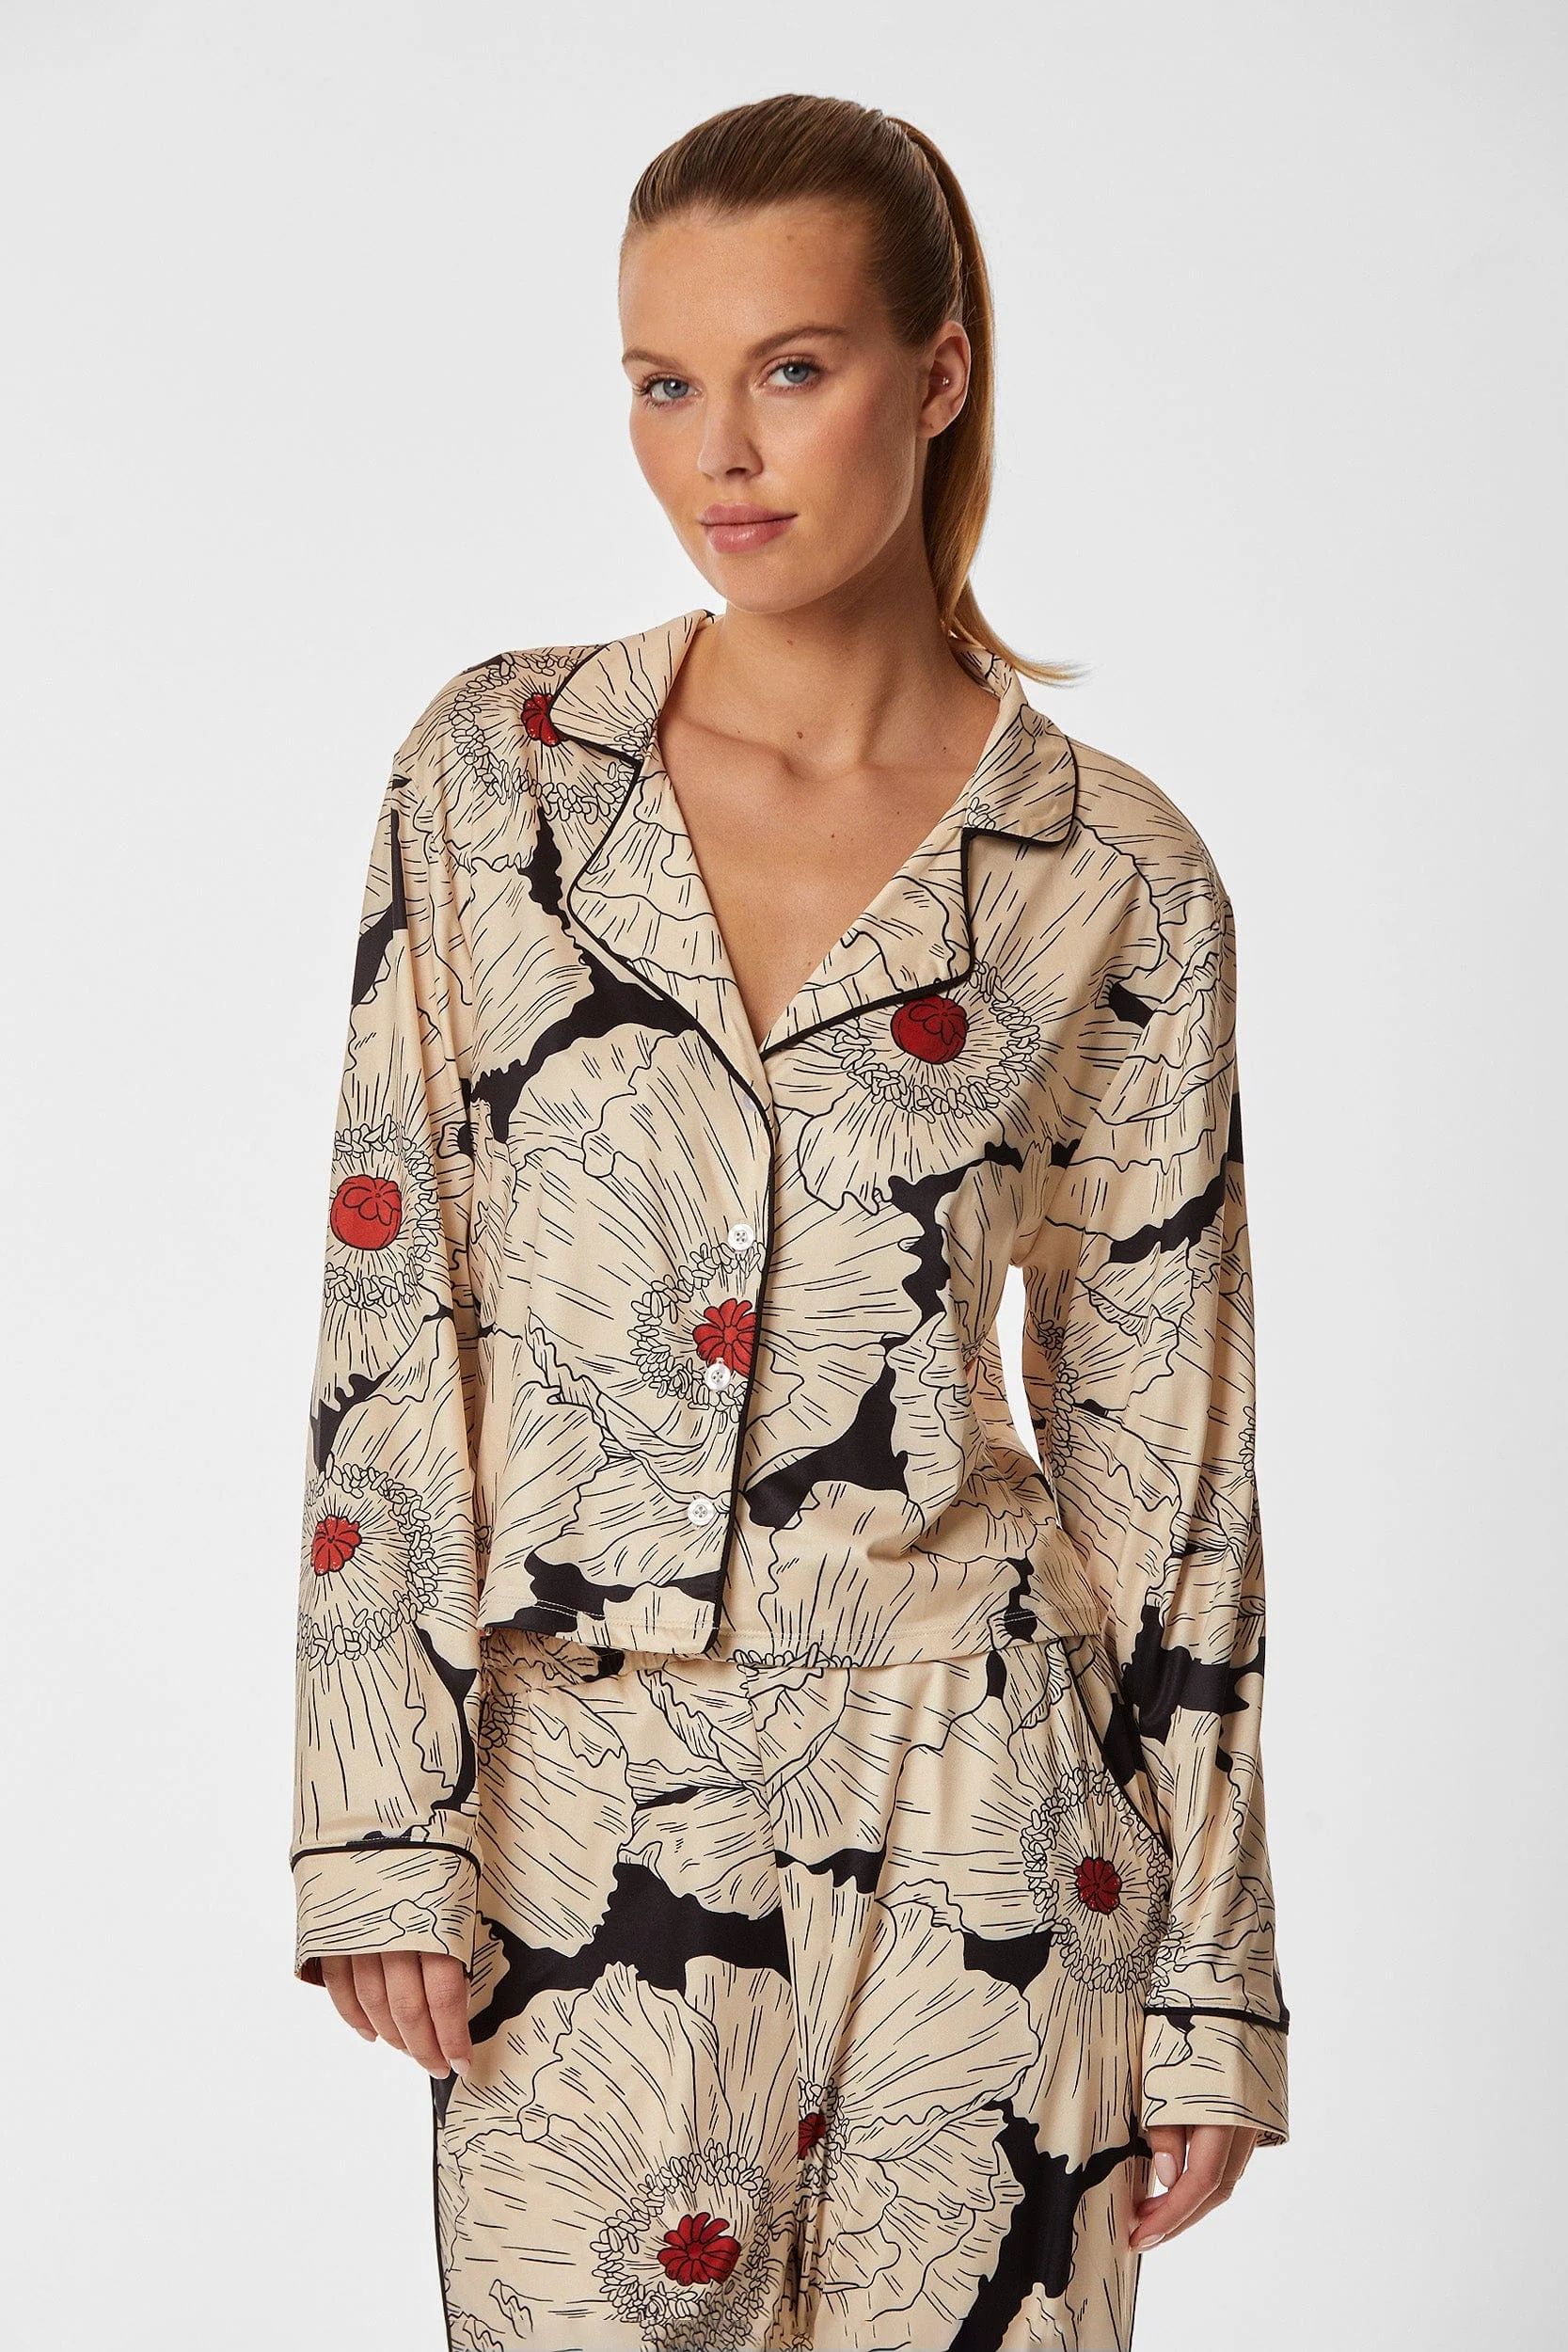 Poppy Pajama Soft Long Sleeve Shirt | The Noli Shop